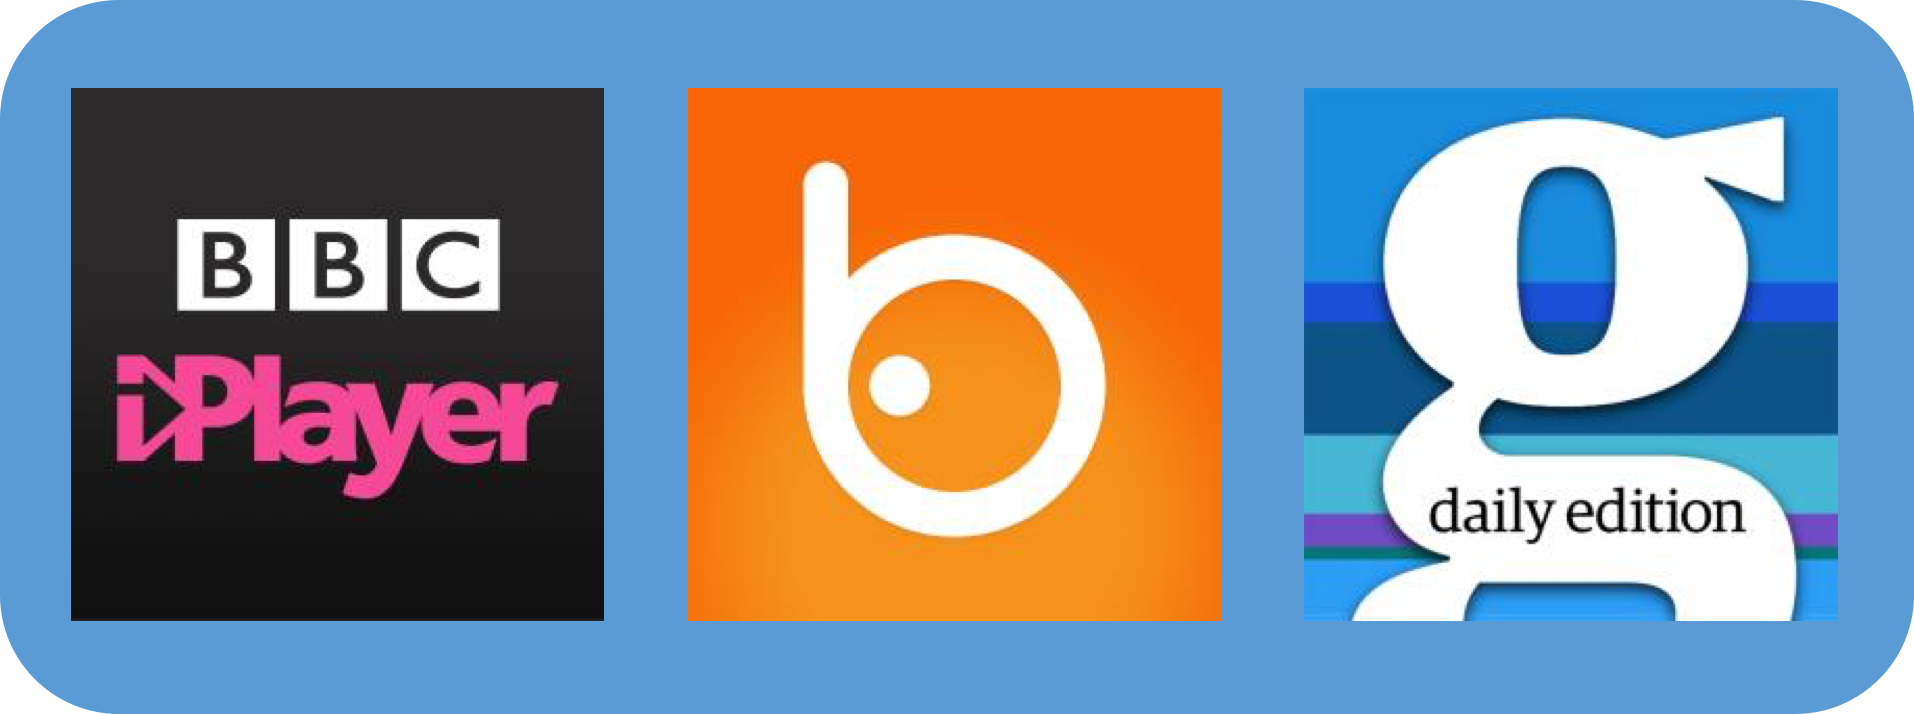 BBC iplayer badoo Guardian icons